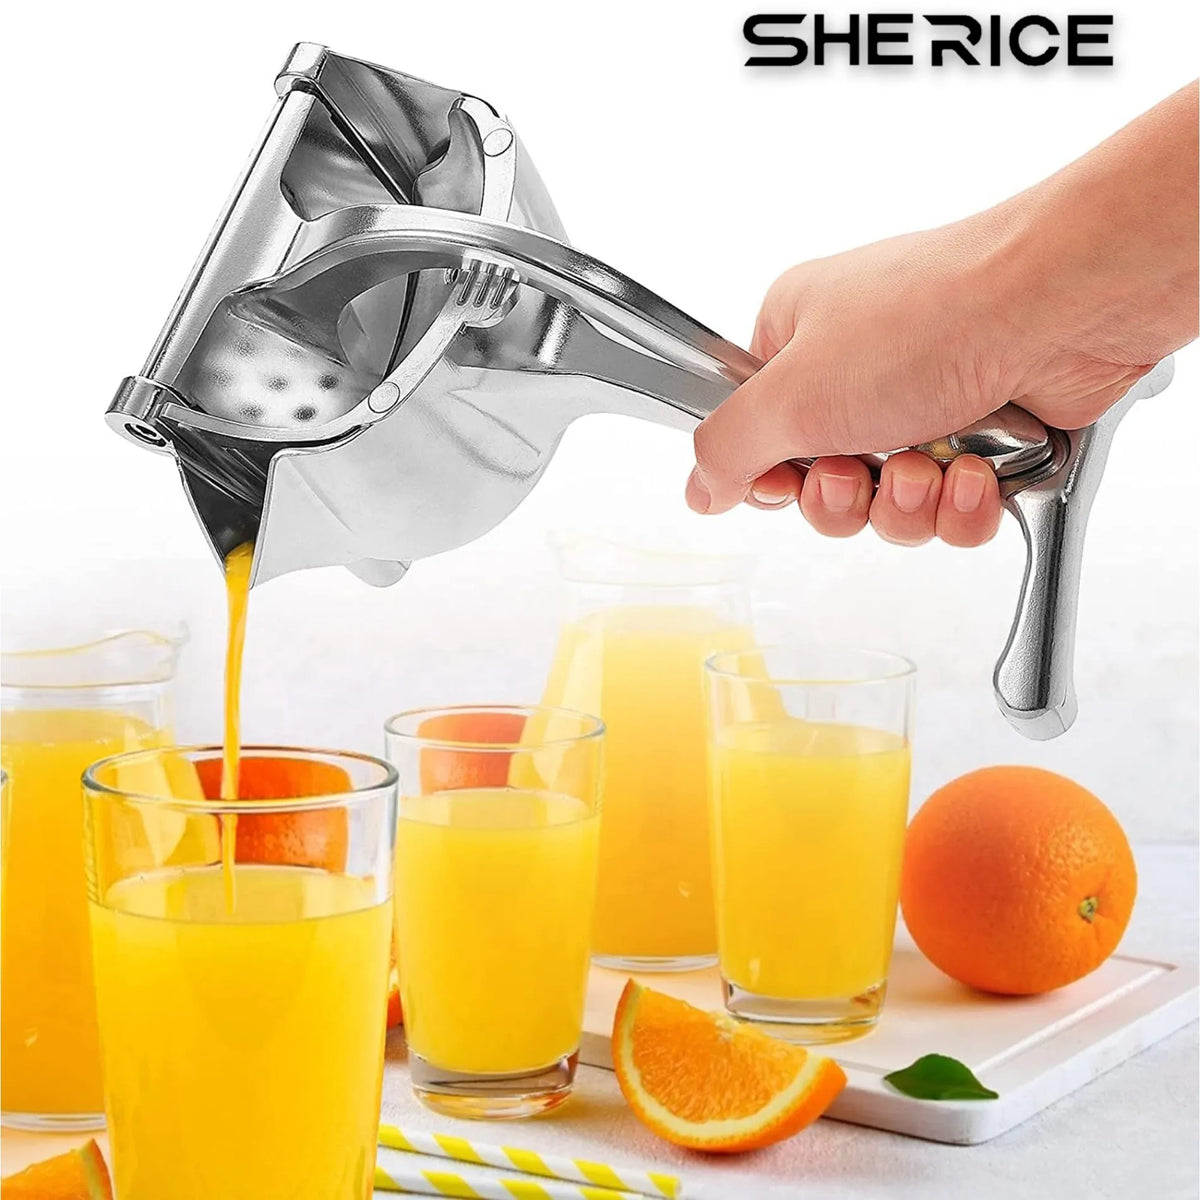 SHERICE Fruit Press Orange Juice Squeezer, Manual Fruit Squeezer, Handheld